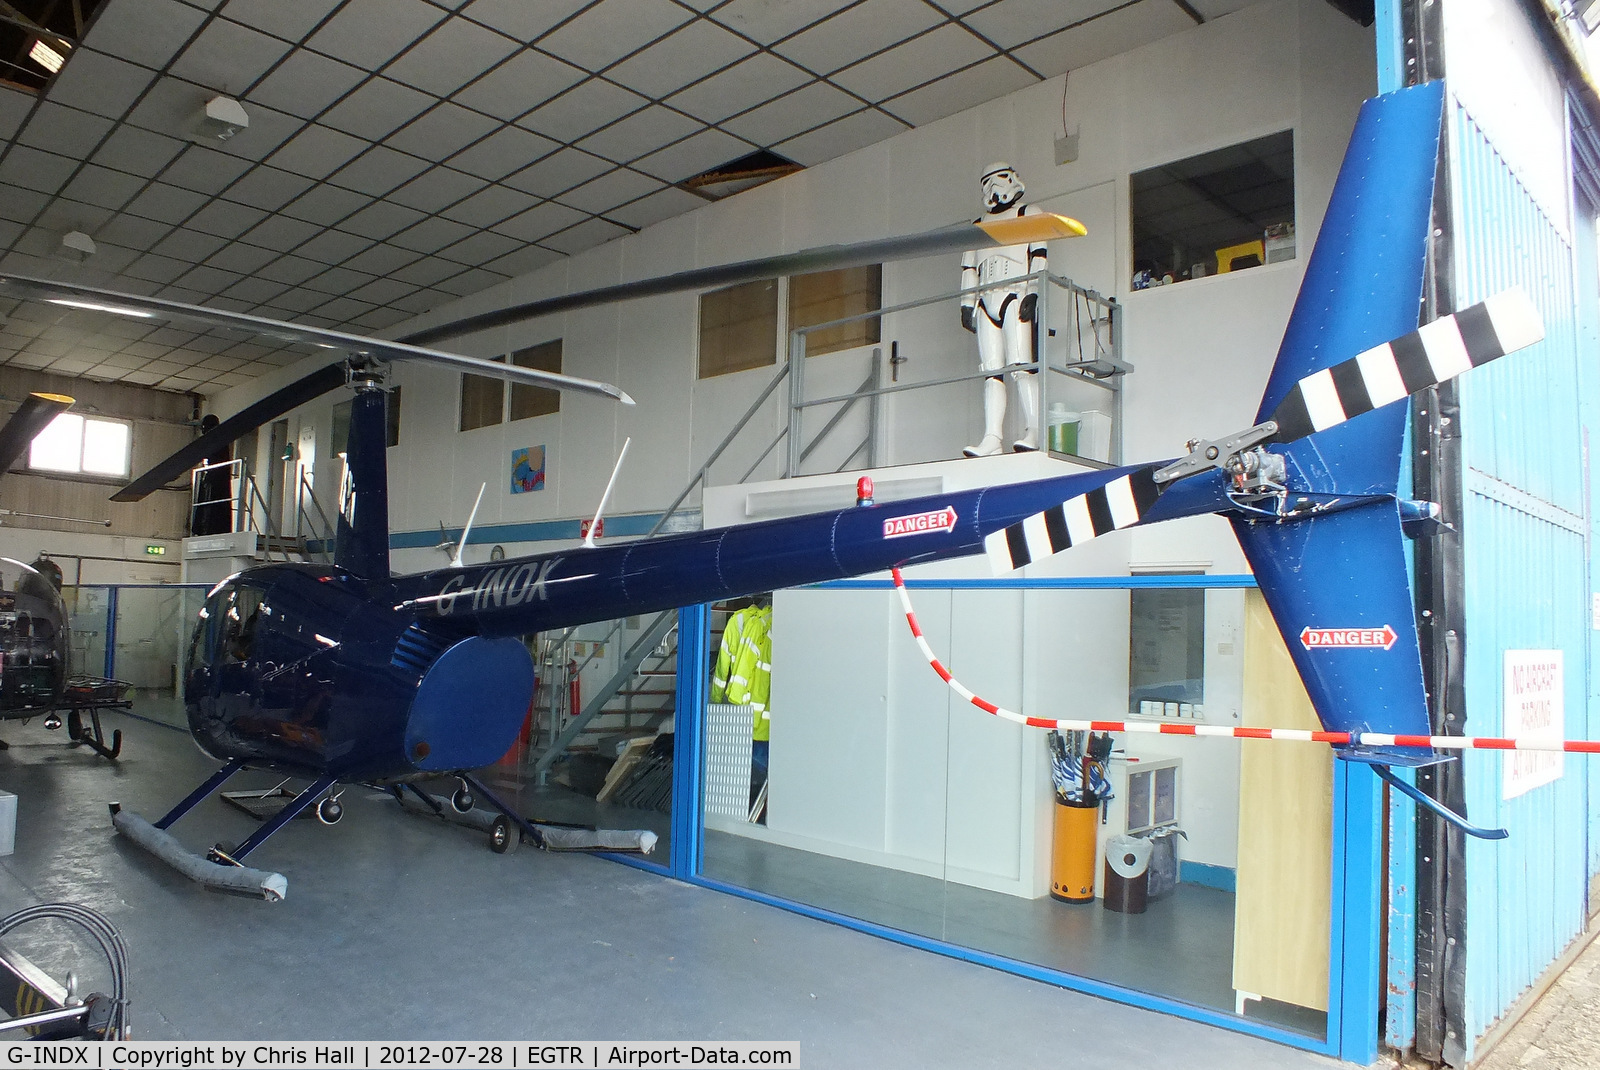 G-INDX, 2004 Robinson R44 Clipper II C/N 10491, Kinetic Avionics Ltd